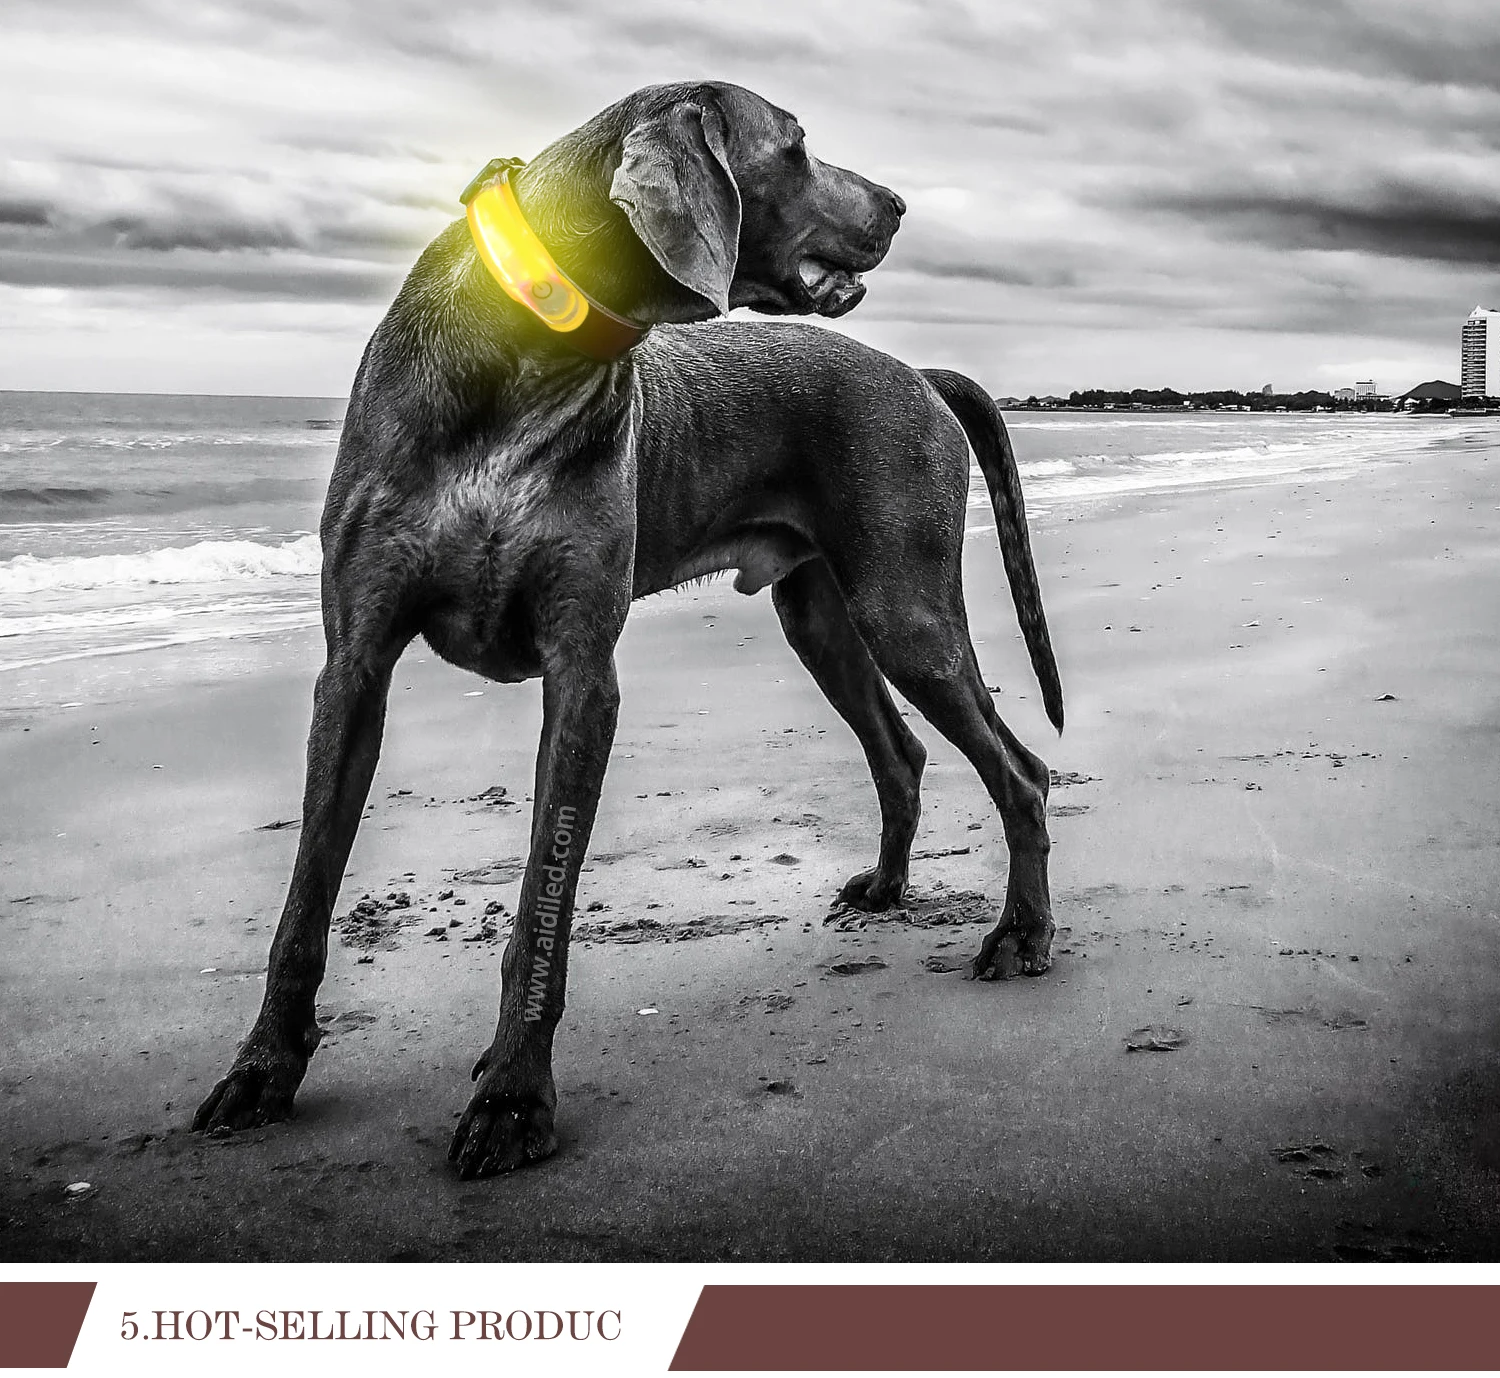 Cheap Night Reflective Safety Pet Training LED Dog Collar